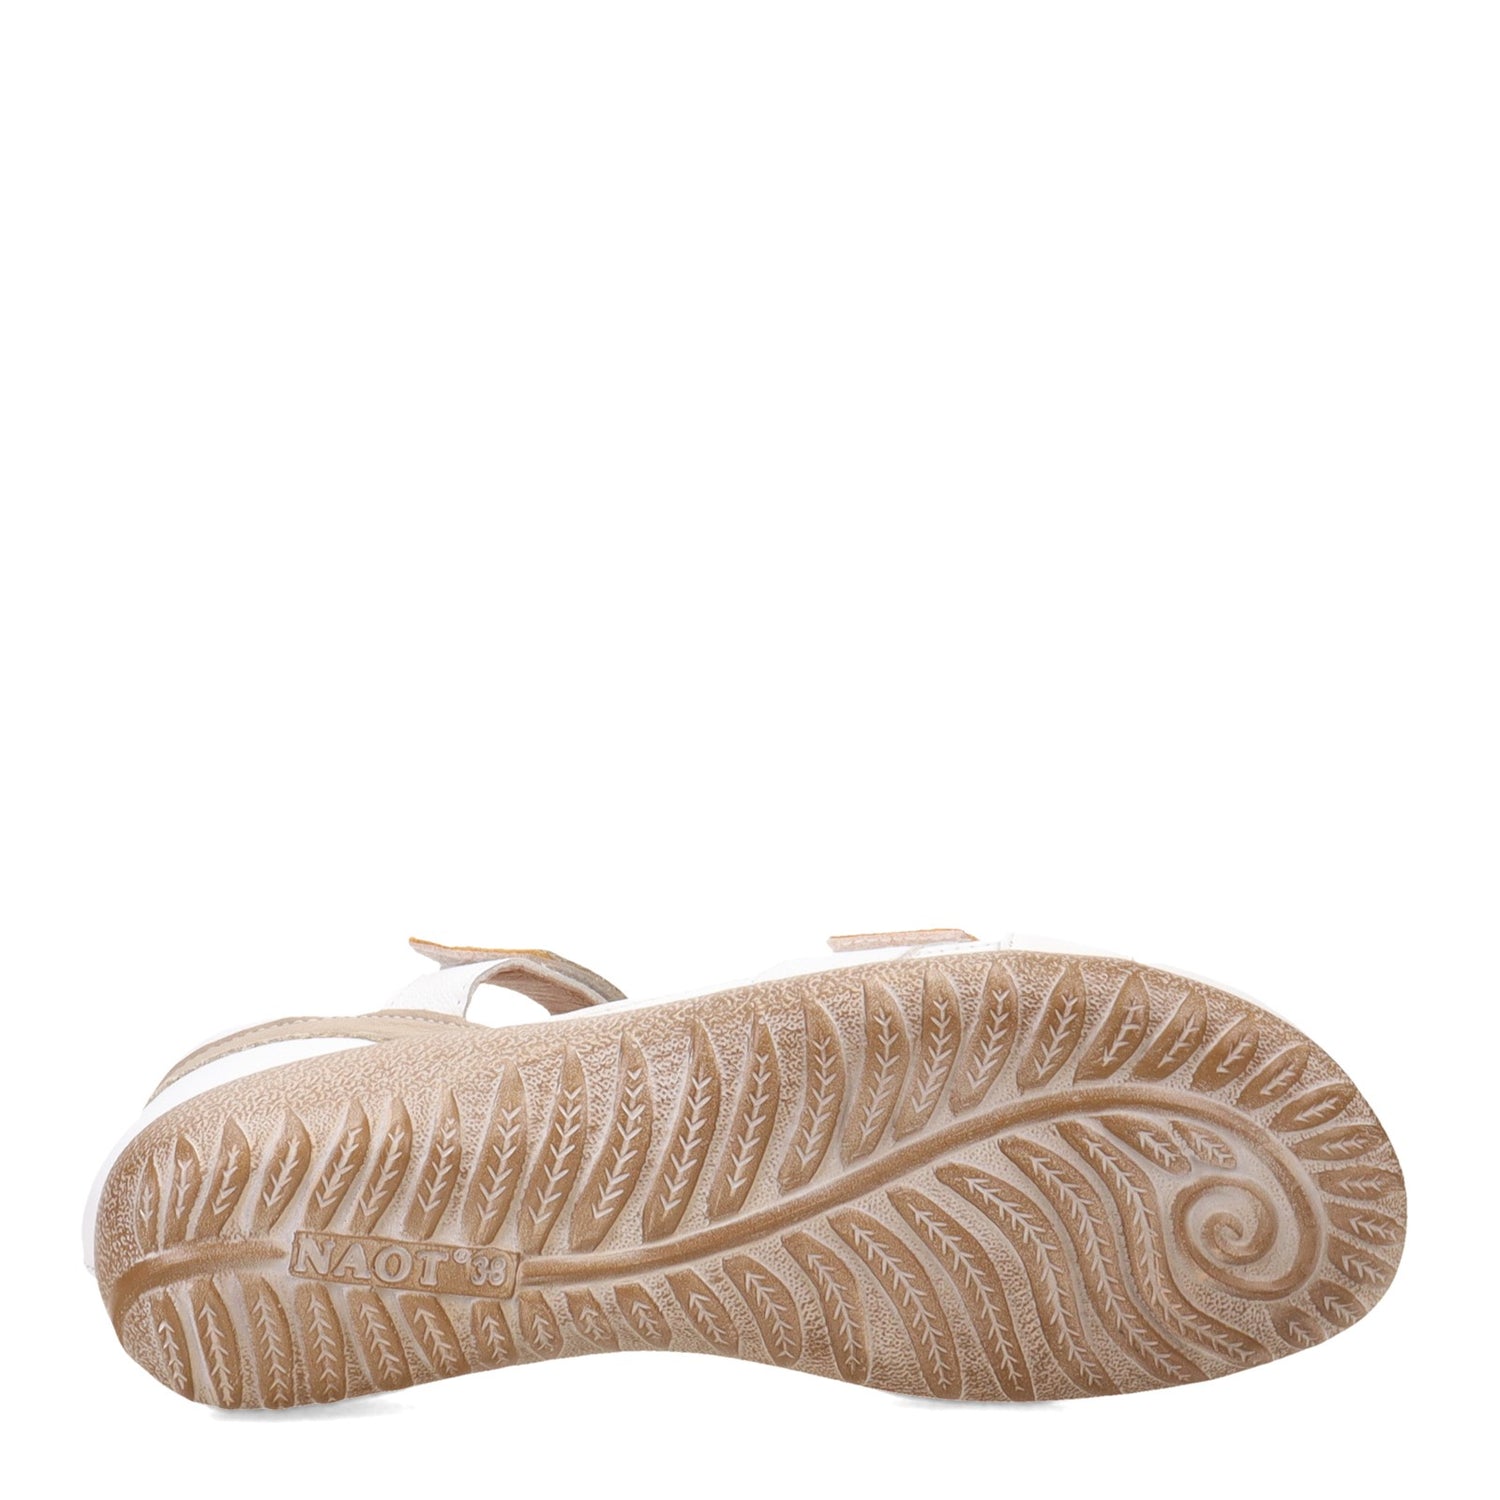 Peltz Shoes  Women's Naot Karawa Sandal White/Beige/Marigold 11204-WEL